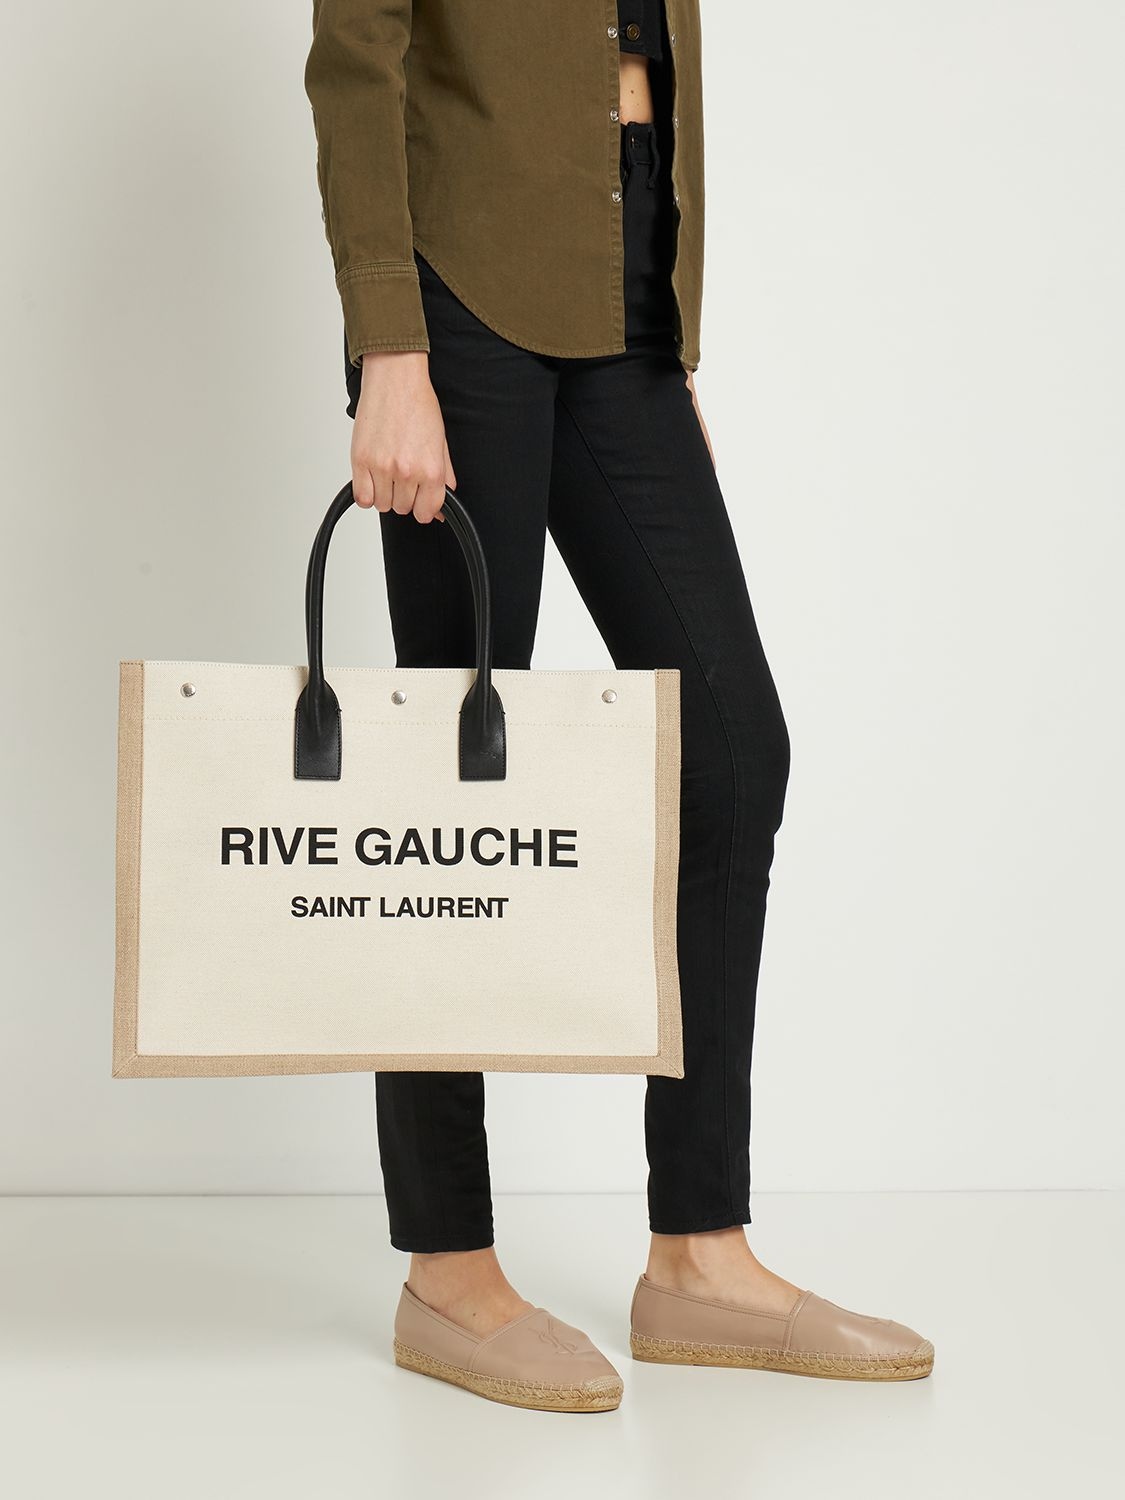 Ysl Rive Gauche Tote Bag